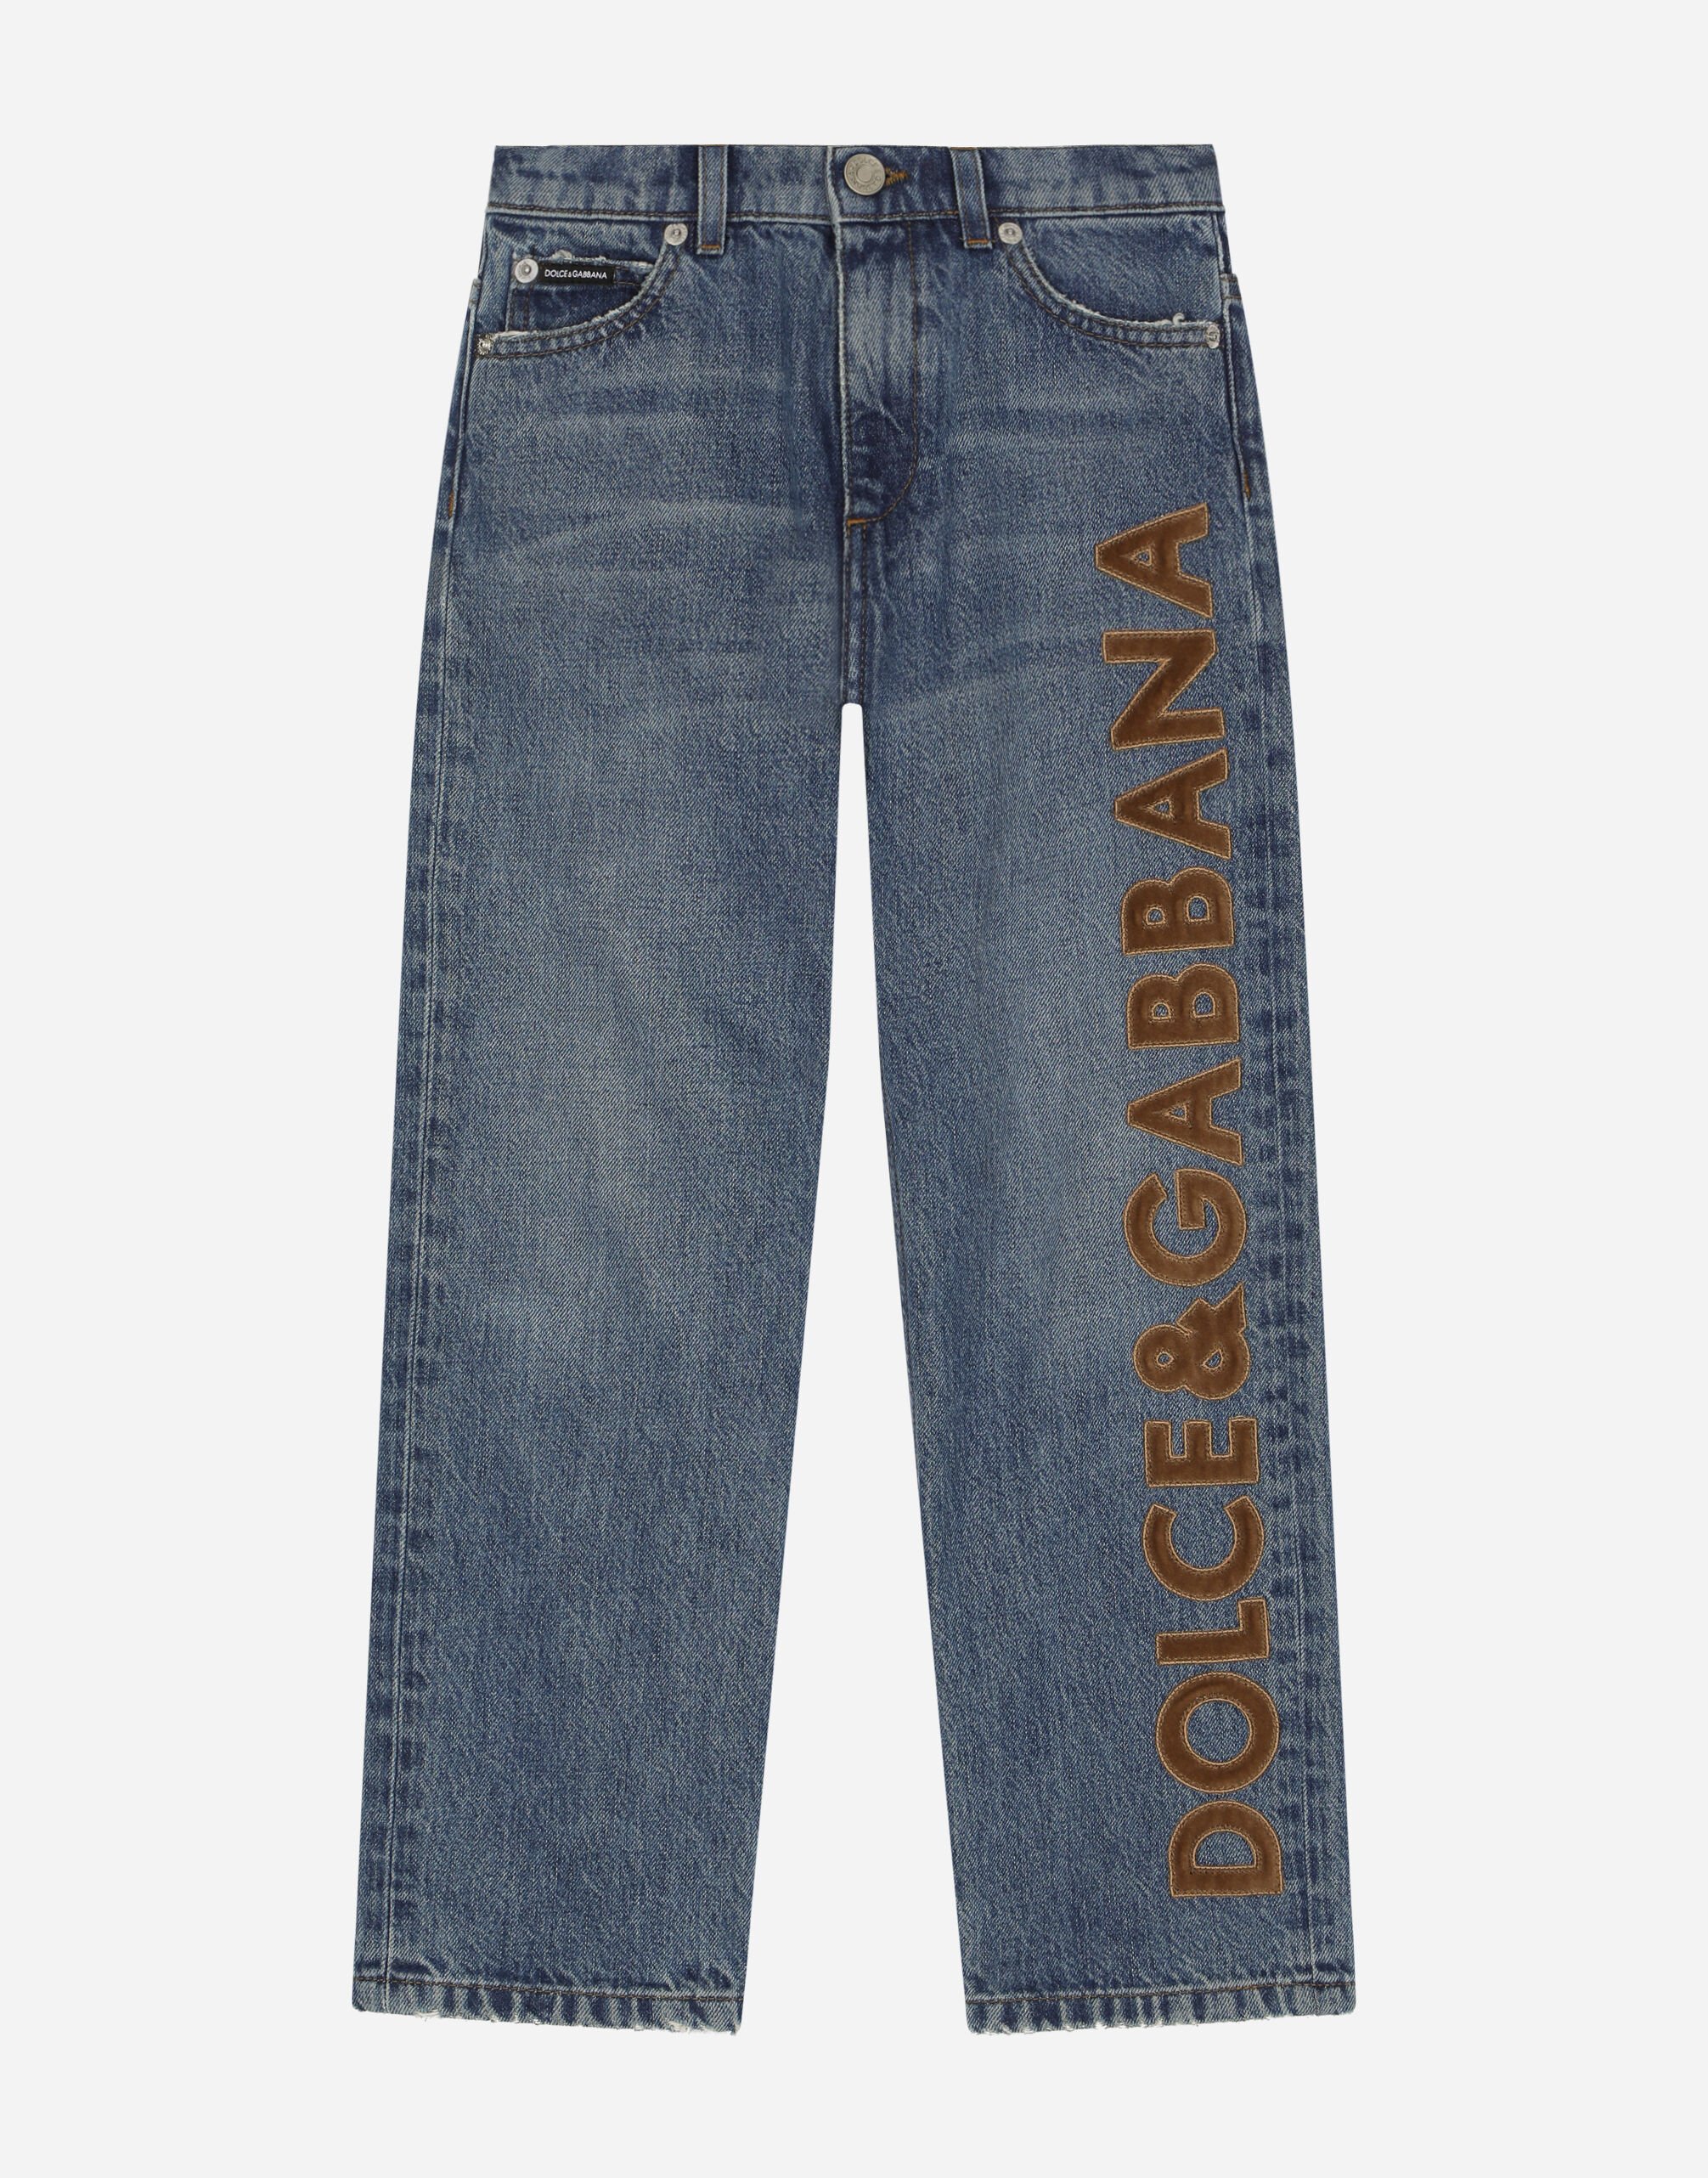 Dolce & Gabbana 5-pocket treated denim jeans with logo appliqué and the logo tag Multicolor L4J840G7H2U